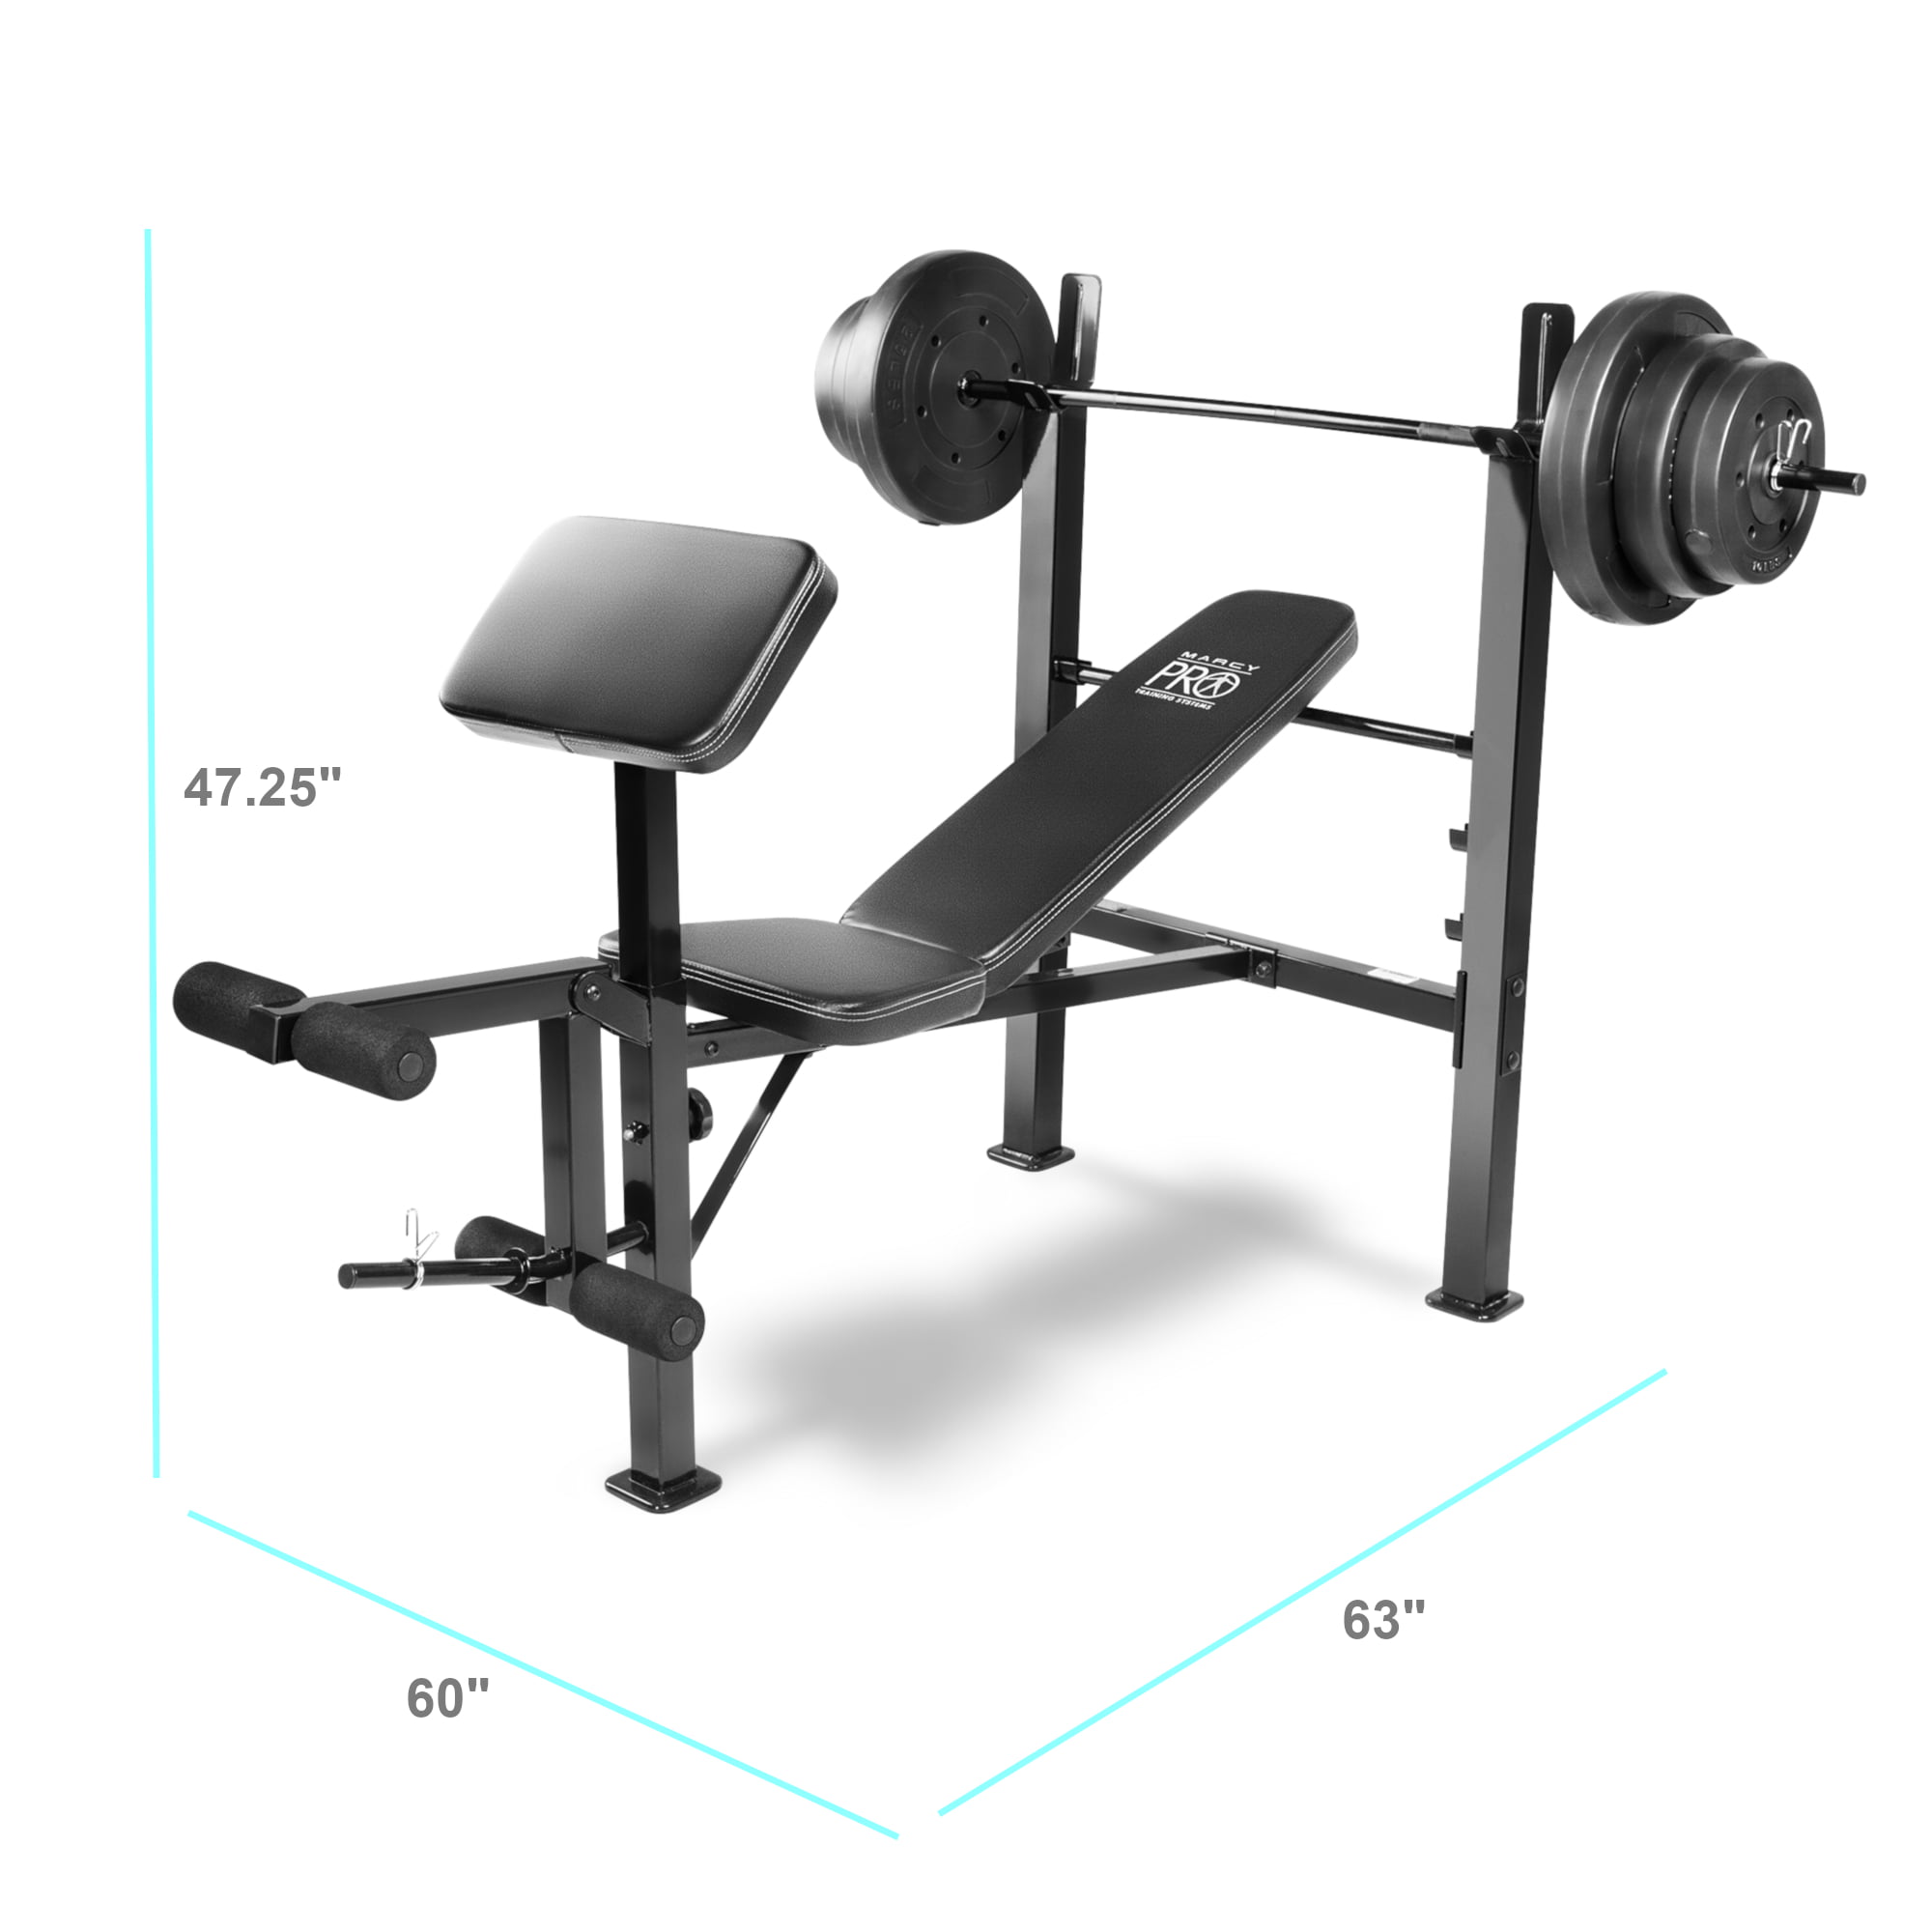 Marcy Pro Standard Home Workout Fitness Gym Bench With 100 Pound Weight Set Walmartcom Walmartcom